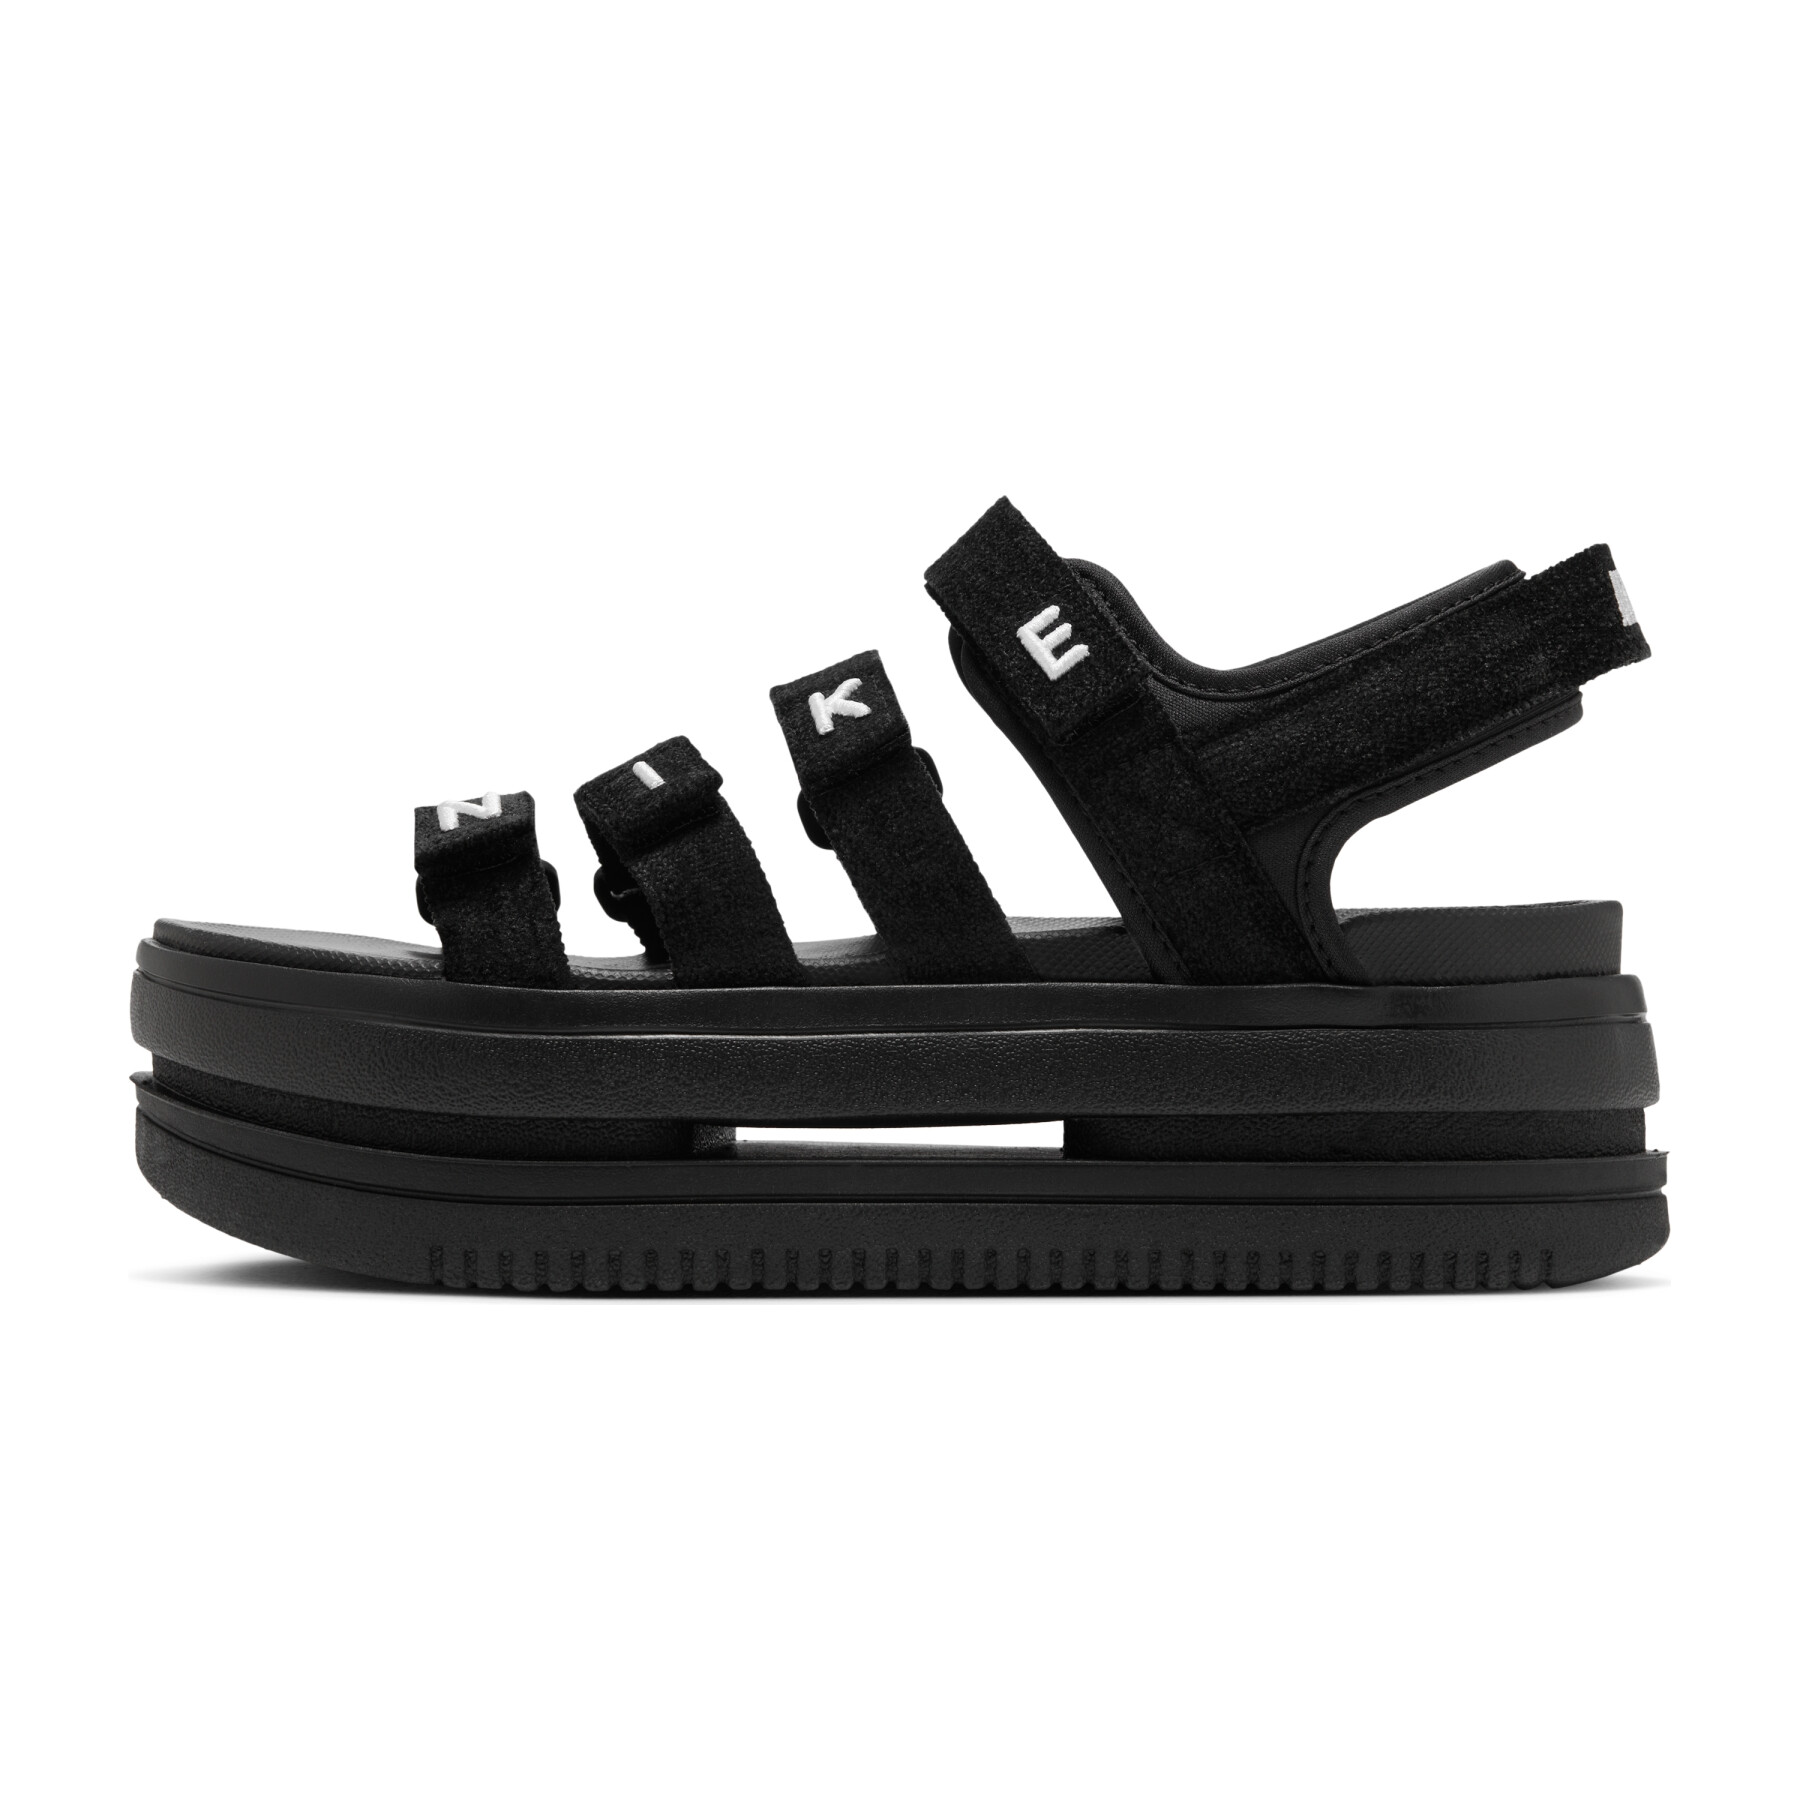 Women's sandals Nike Icon Classic SE